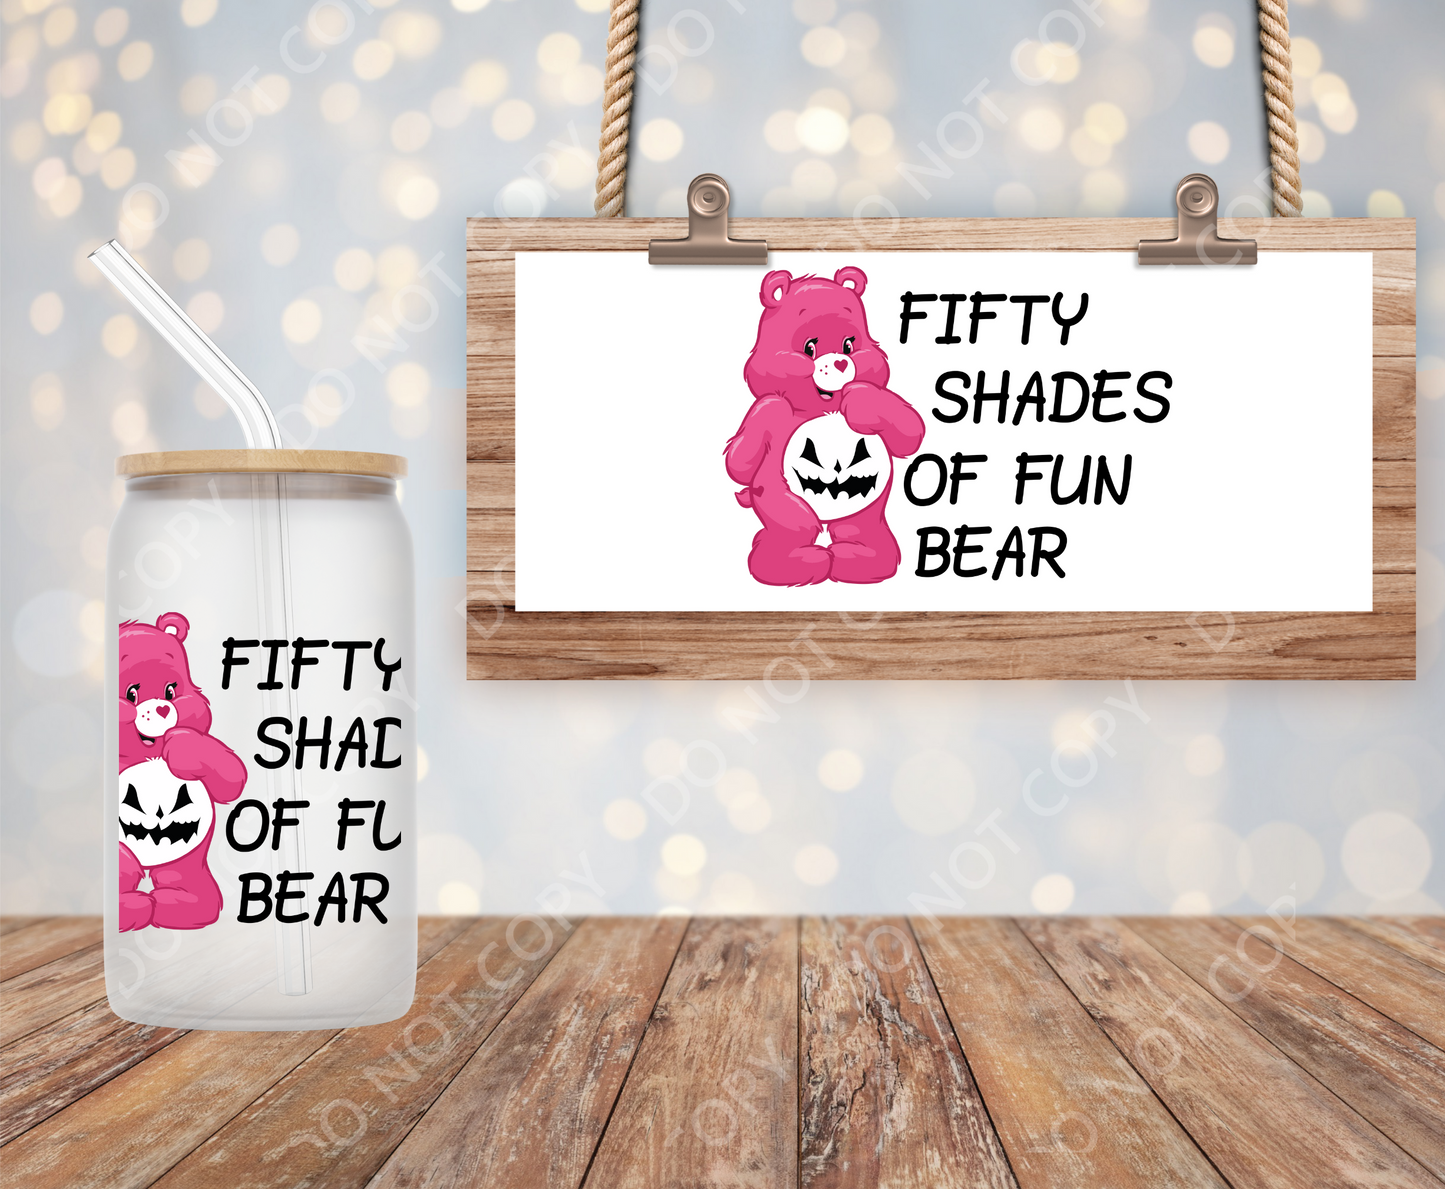 Swear Bear (fifty shades of fun bear )- UV dtf 16 OZ SIZE